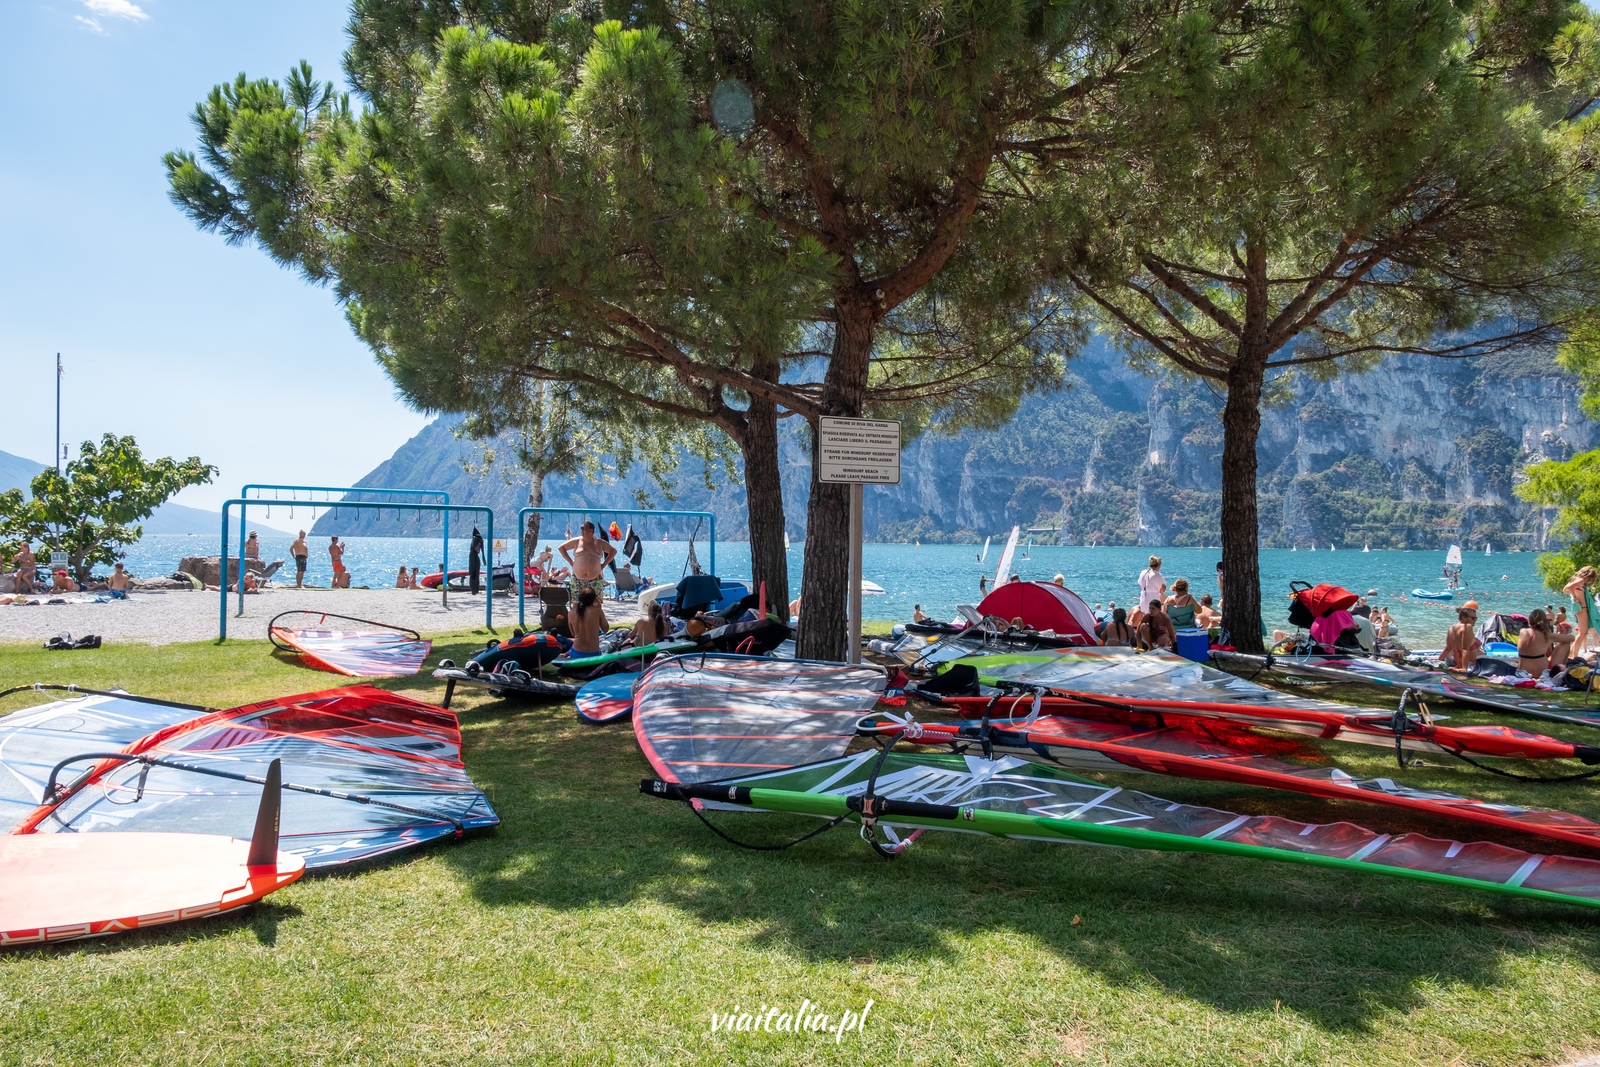 Windsurfing school at Riva del Garda